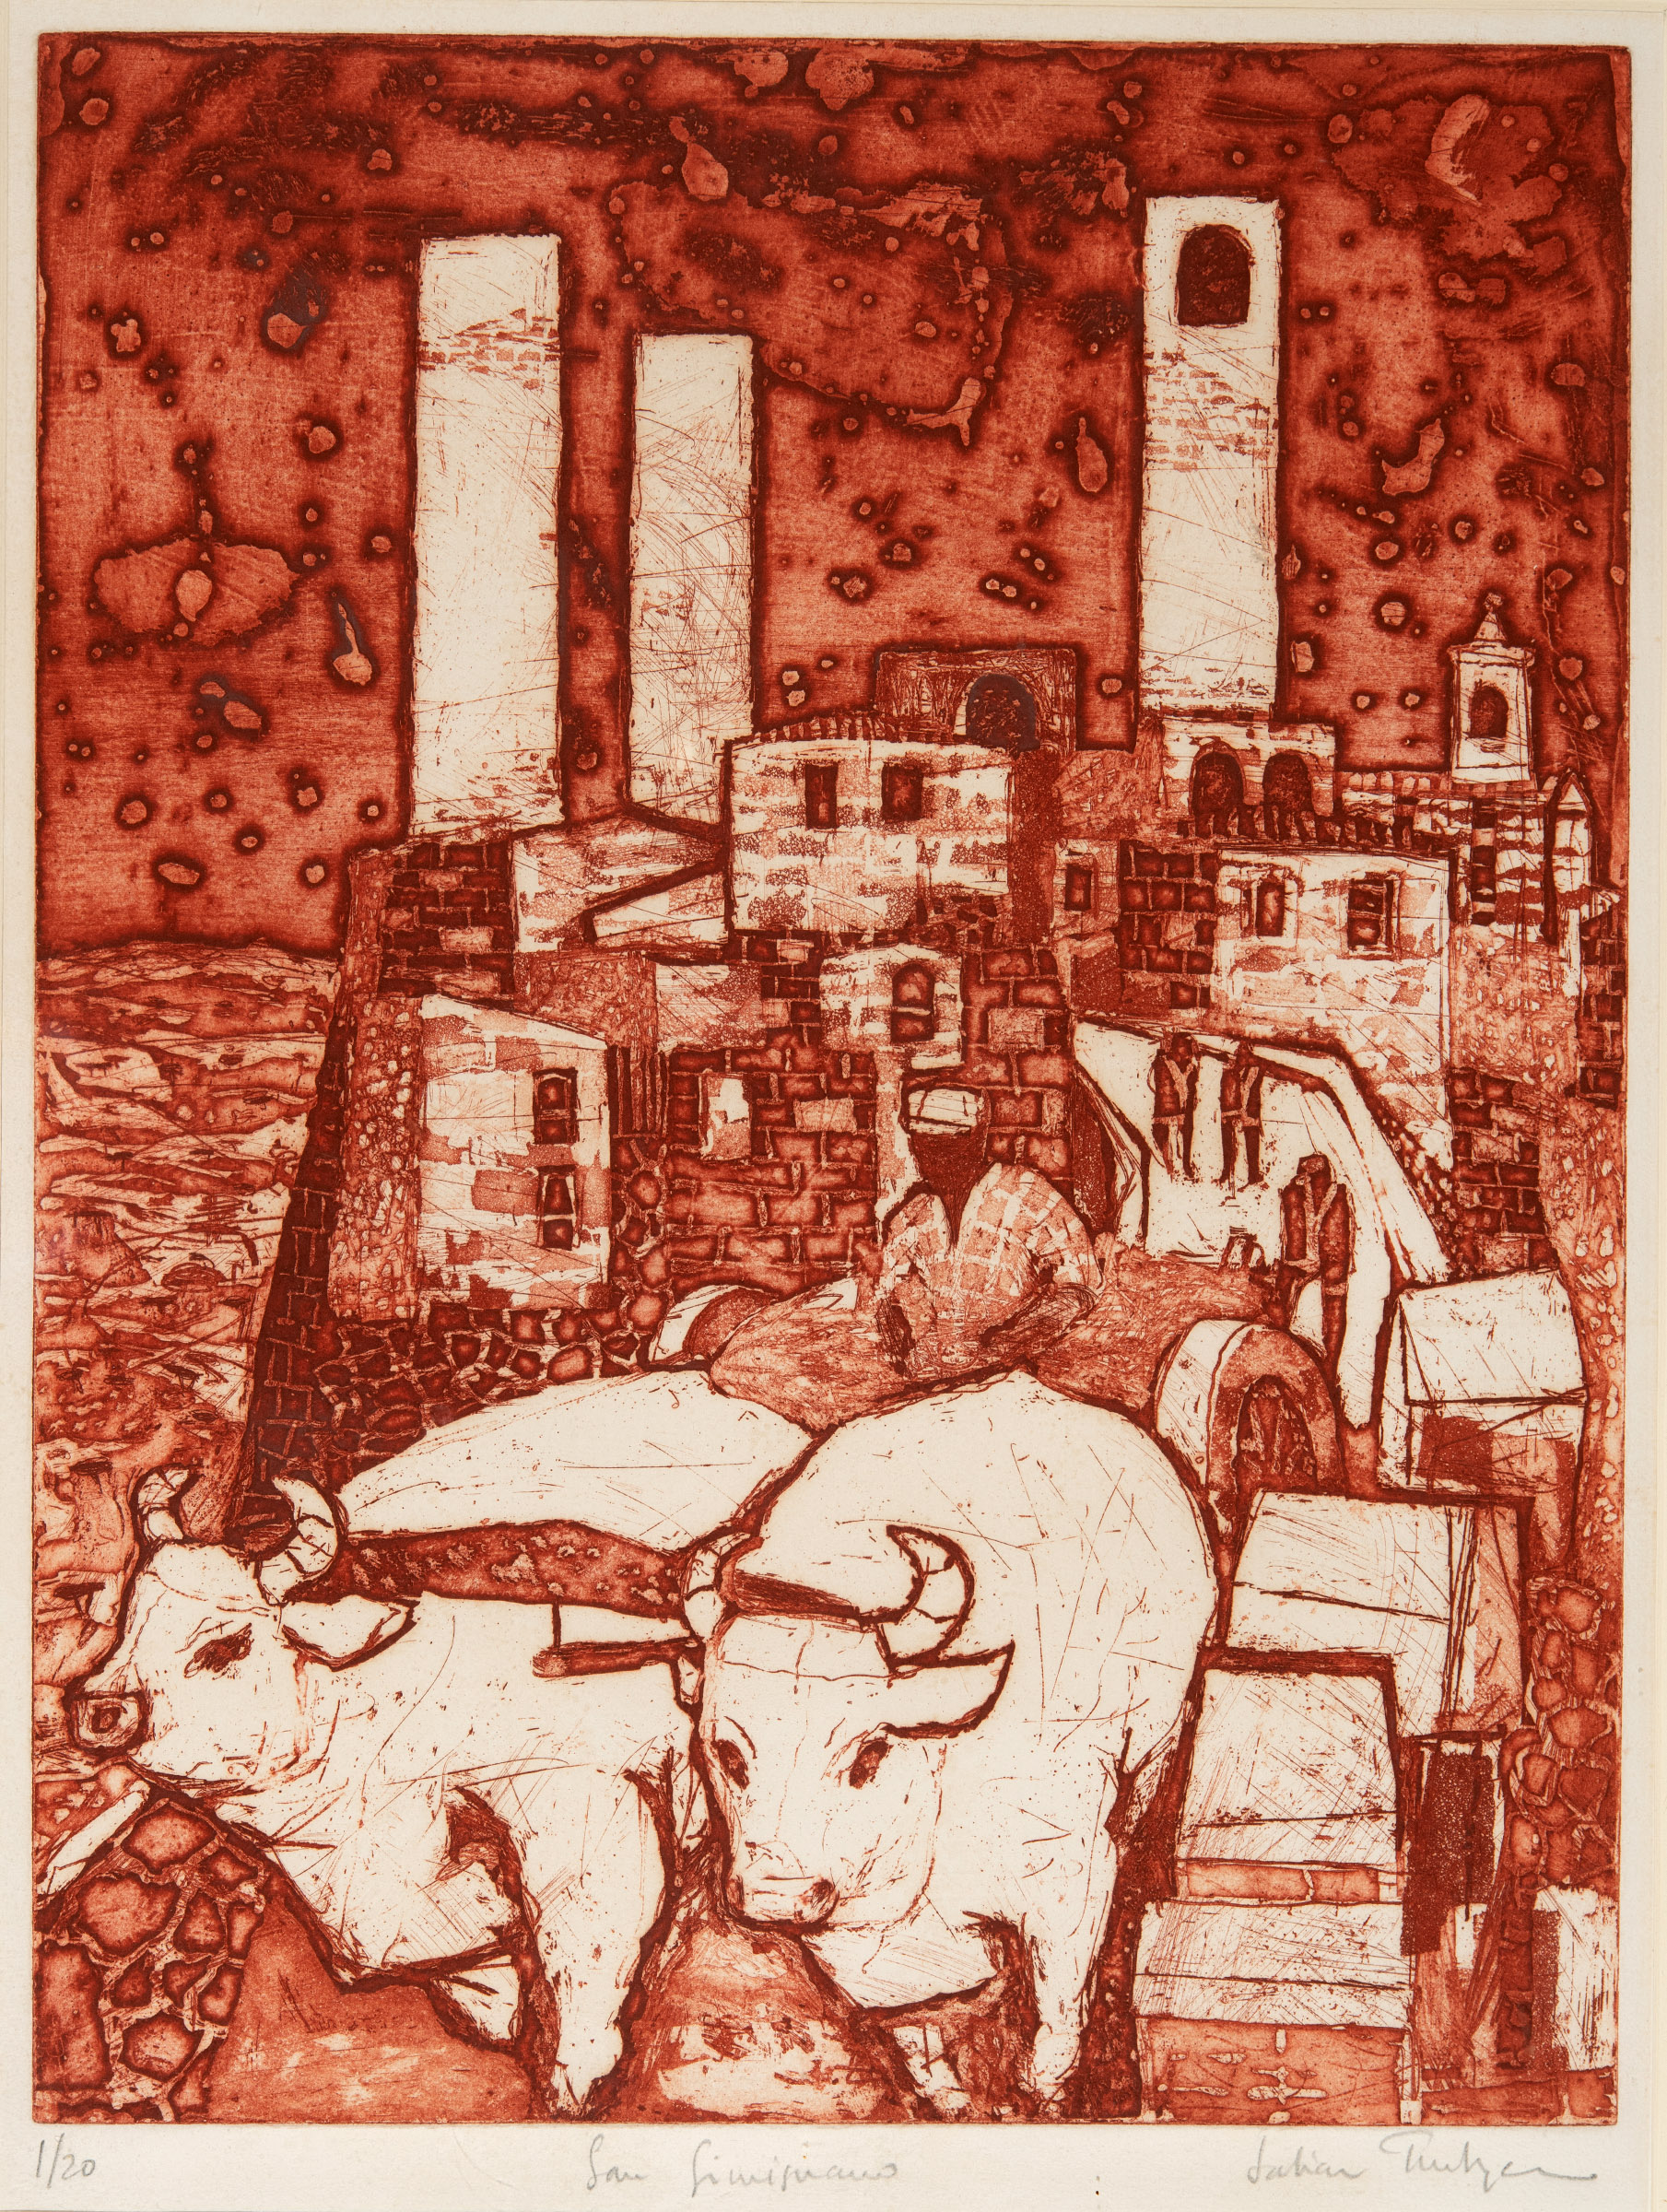 JULIAN TREVELYAN, R.A. (BRITISH, 1910-1988) 'San Gimignano', etching, limited edition 1/20, titled